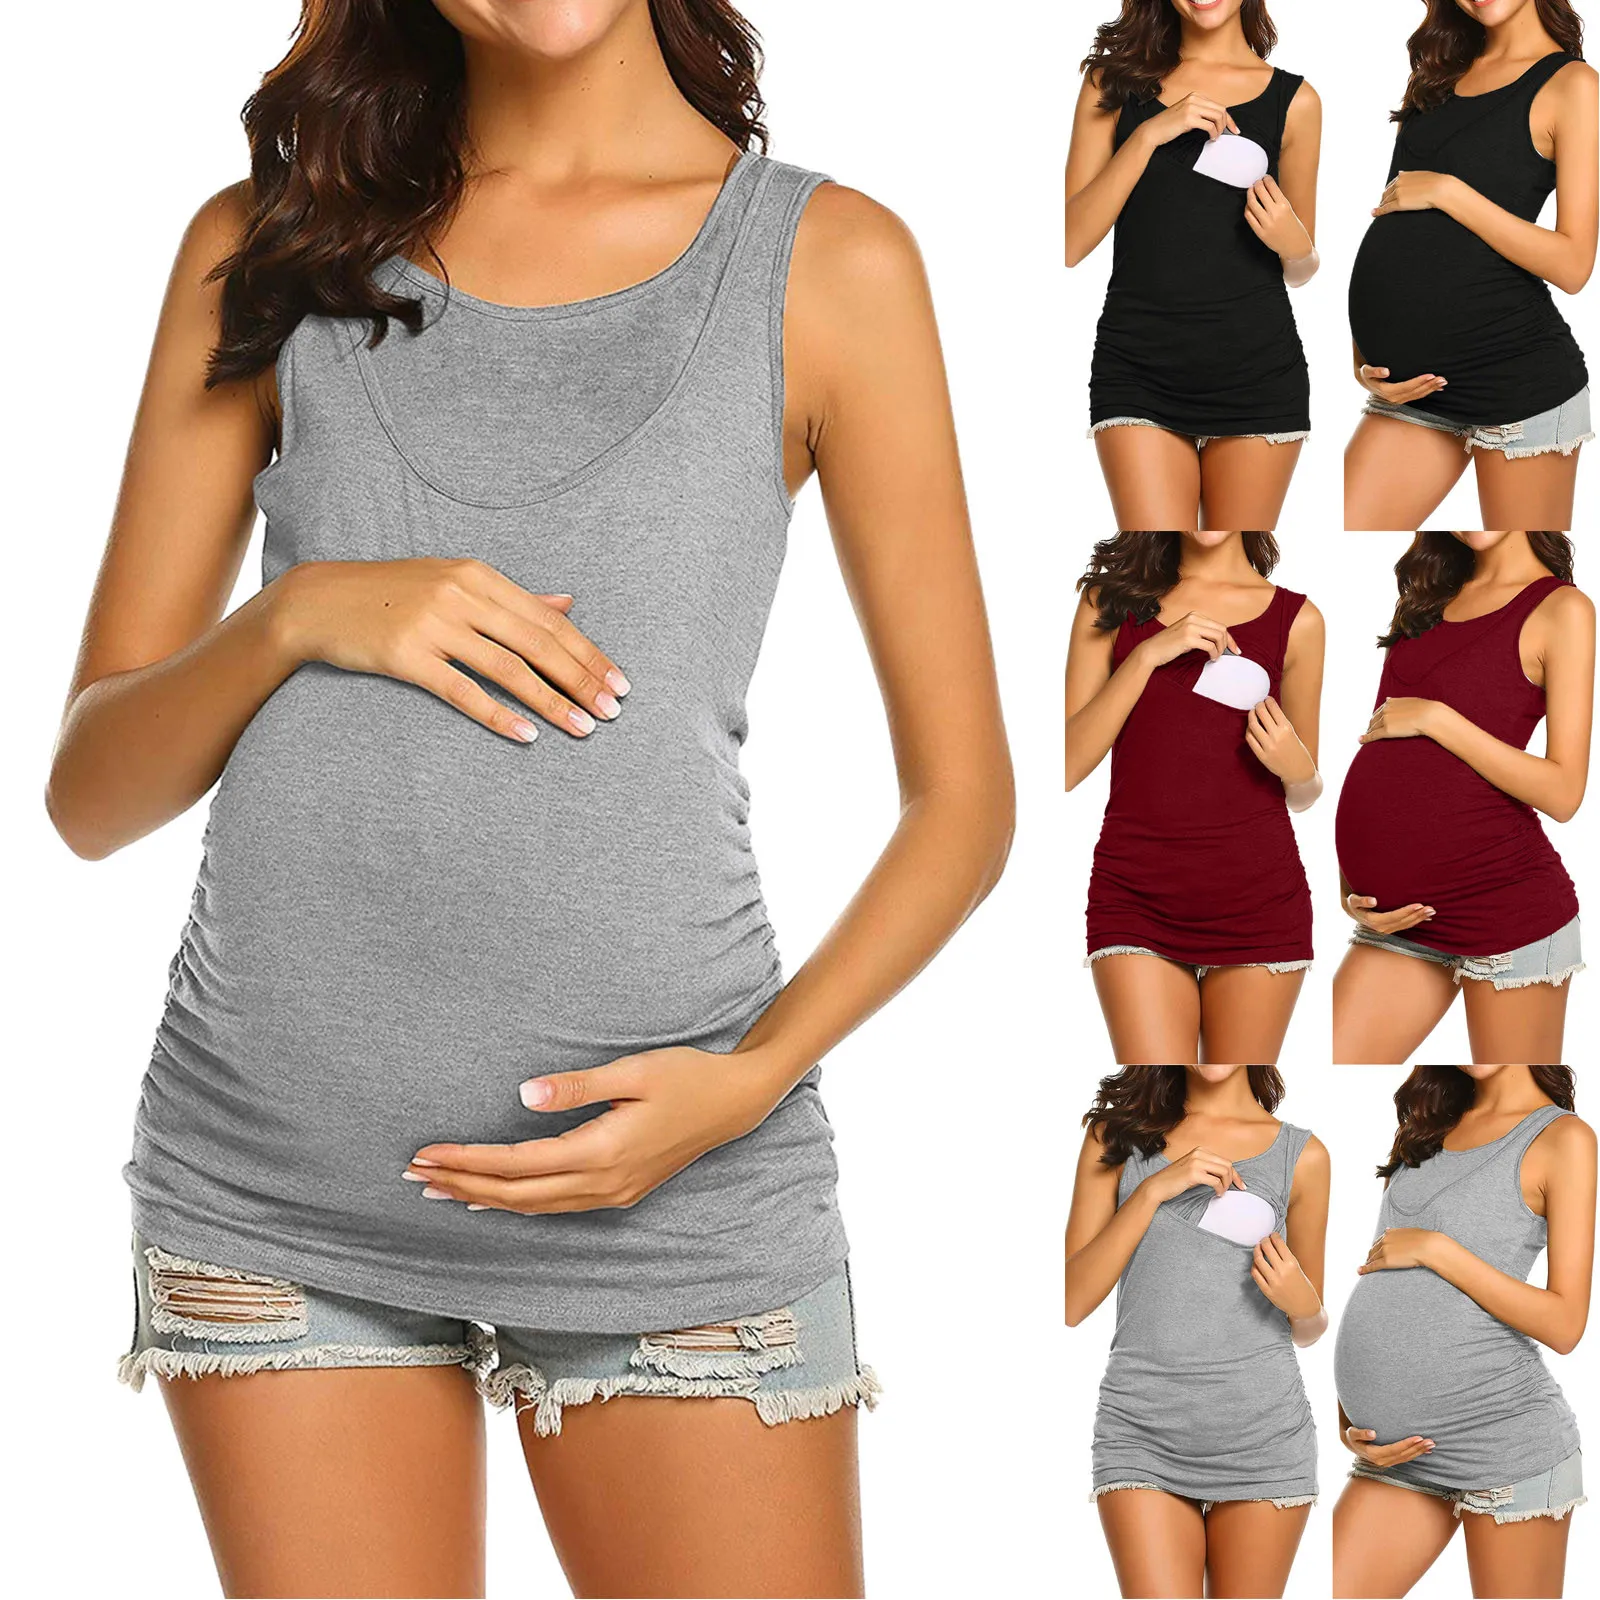 Ekouaer Women's Maternity Nursing Tops 3 Pack Breastfeeding Tank Top Shirt Double Layer Soft Sleeveless Pregnancy Clothes 